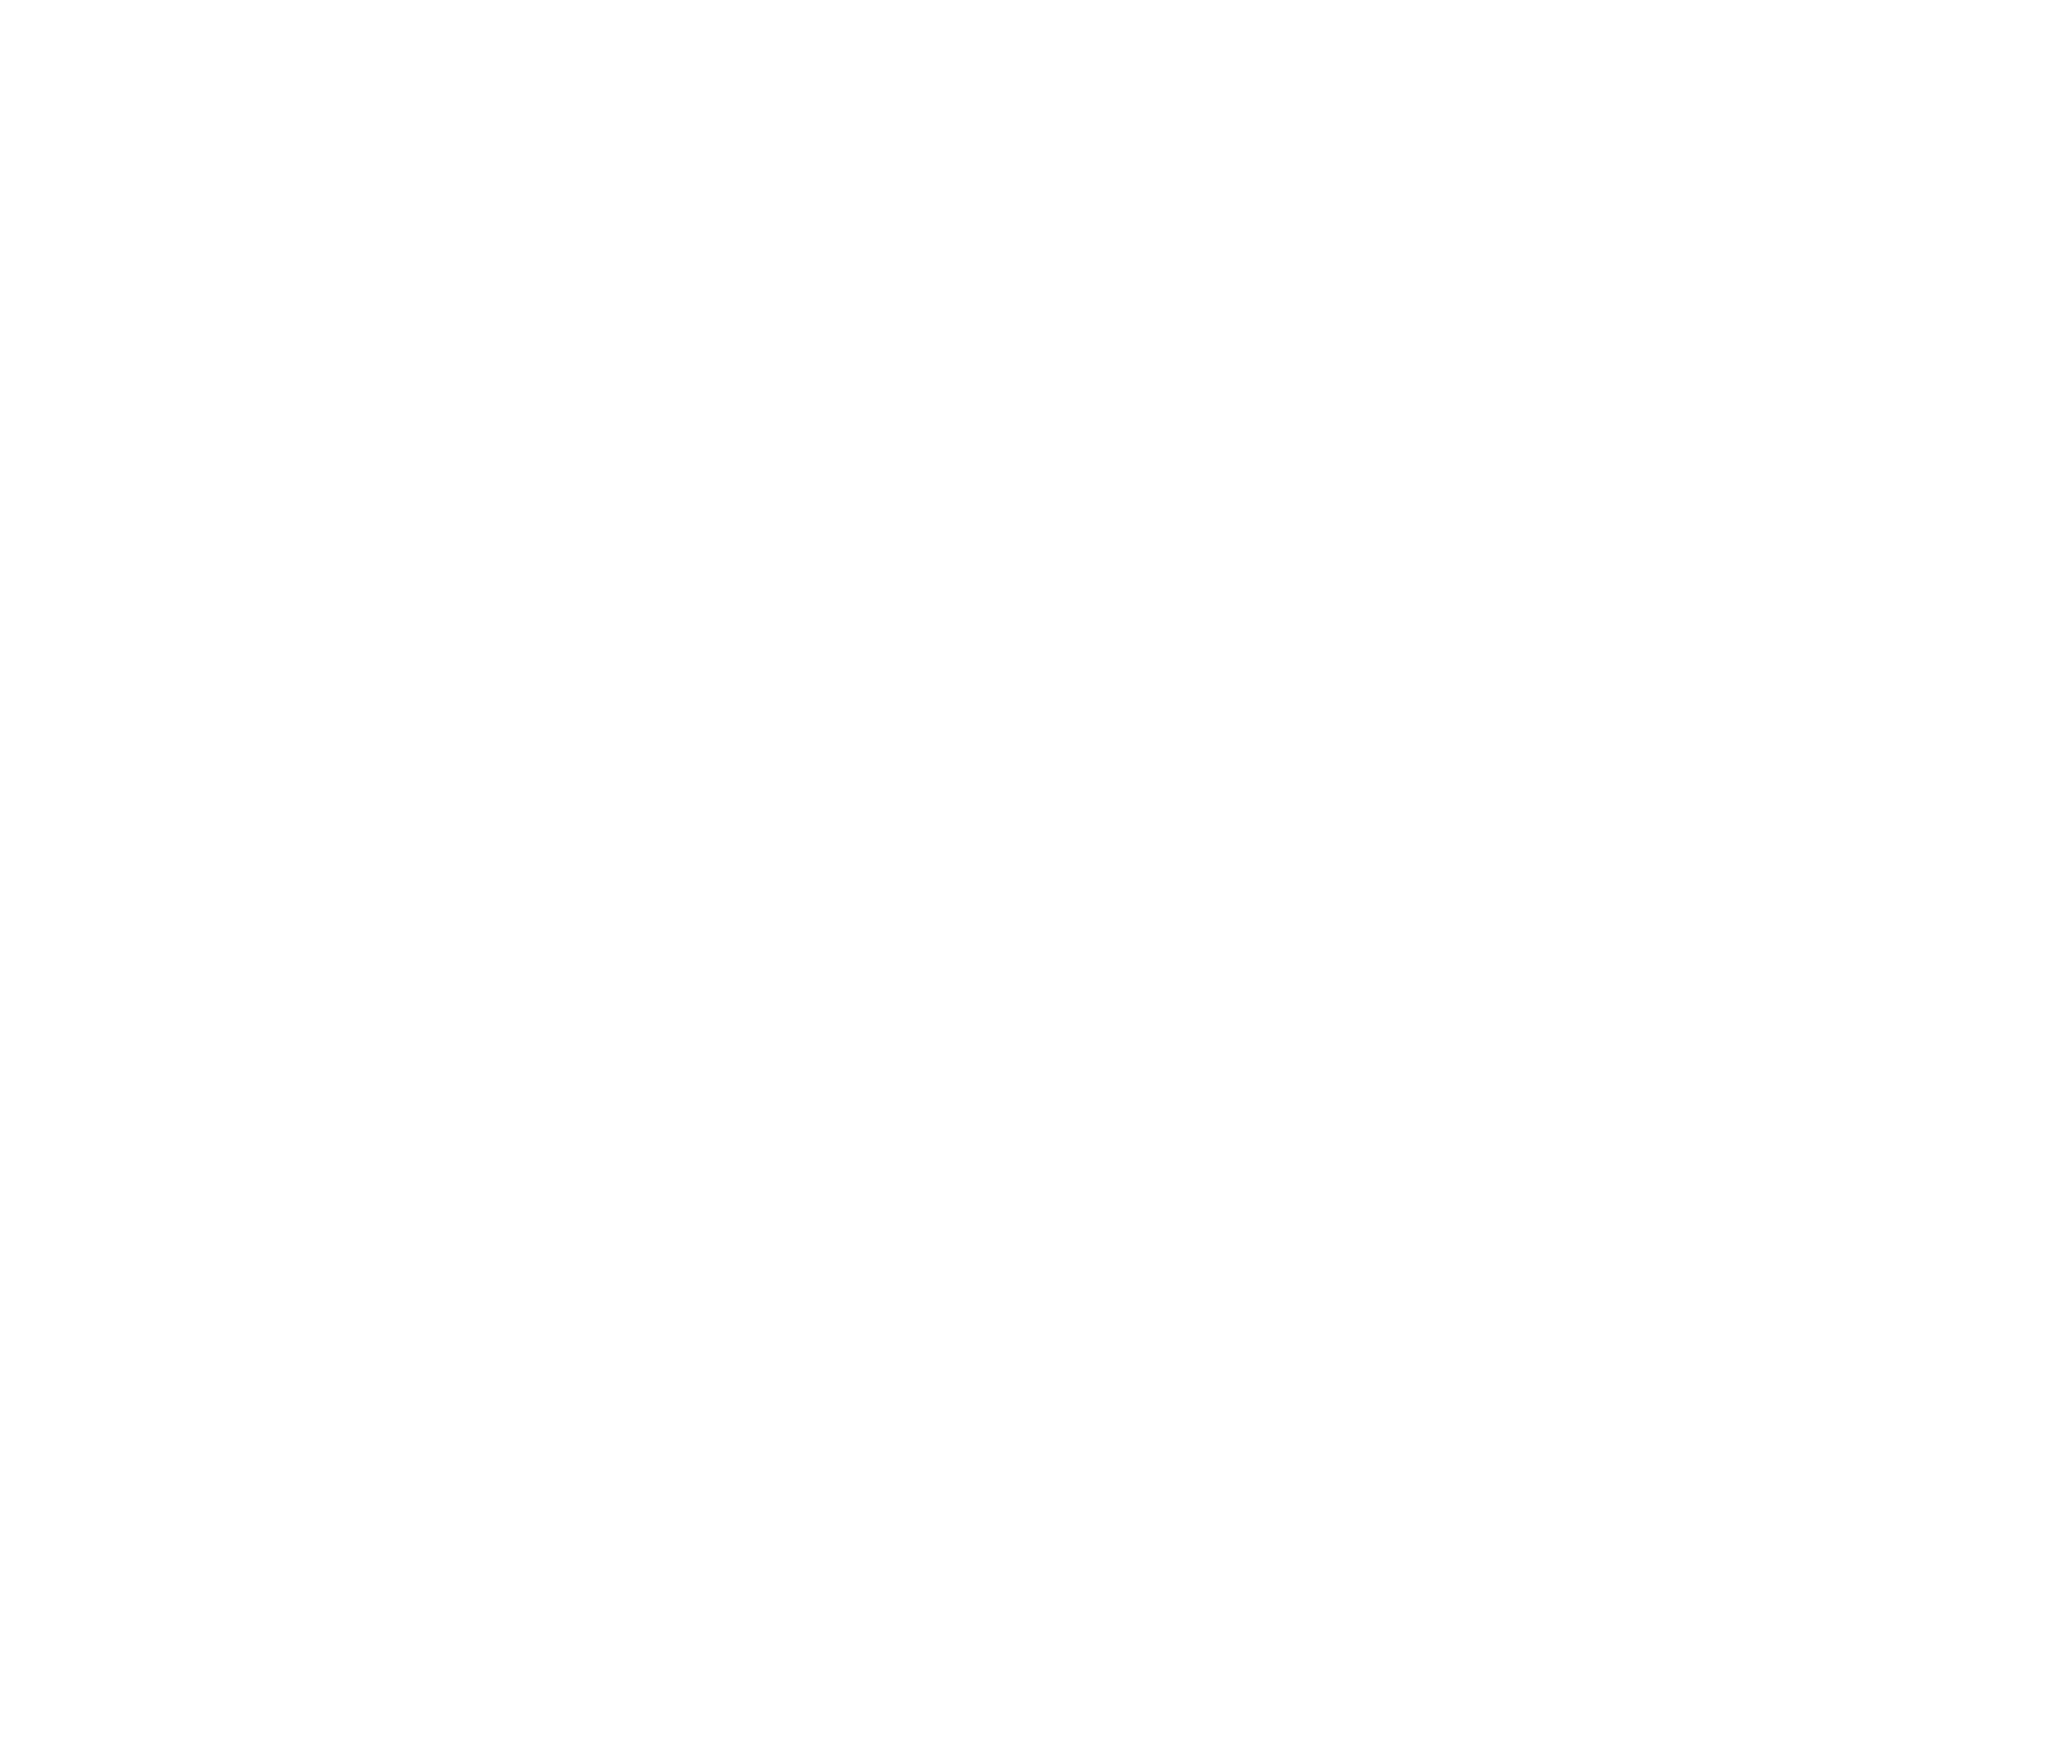 CreateGrowth360